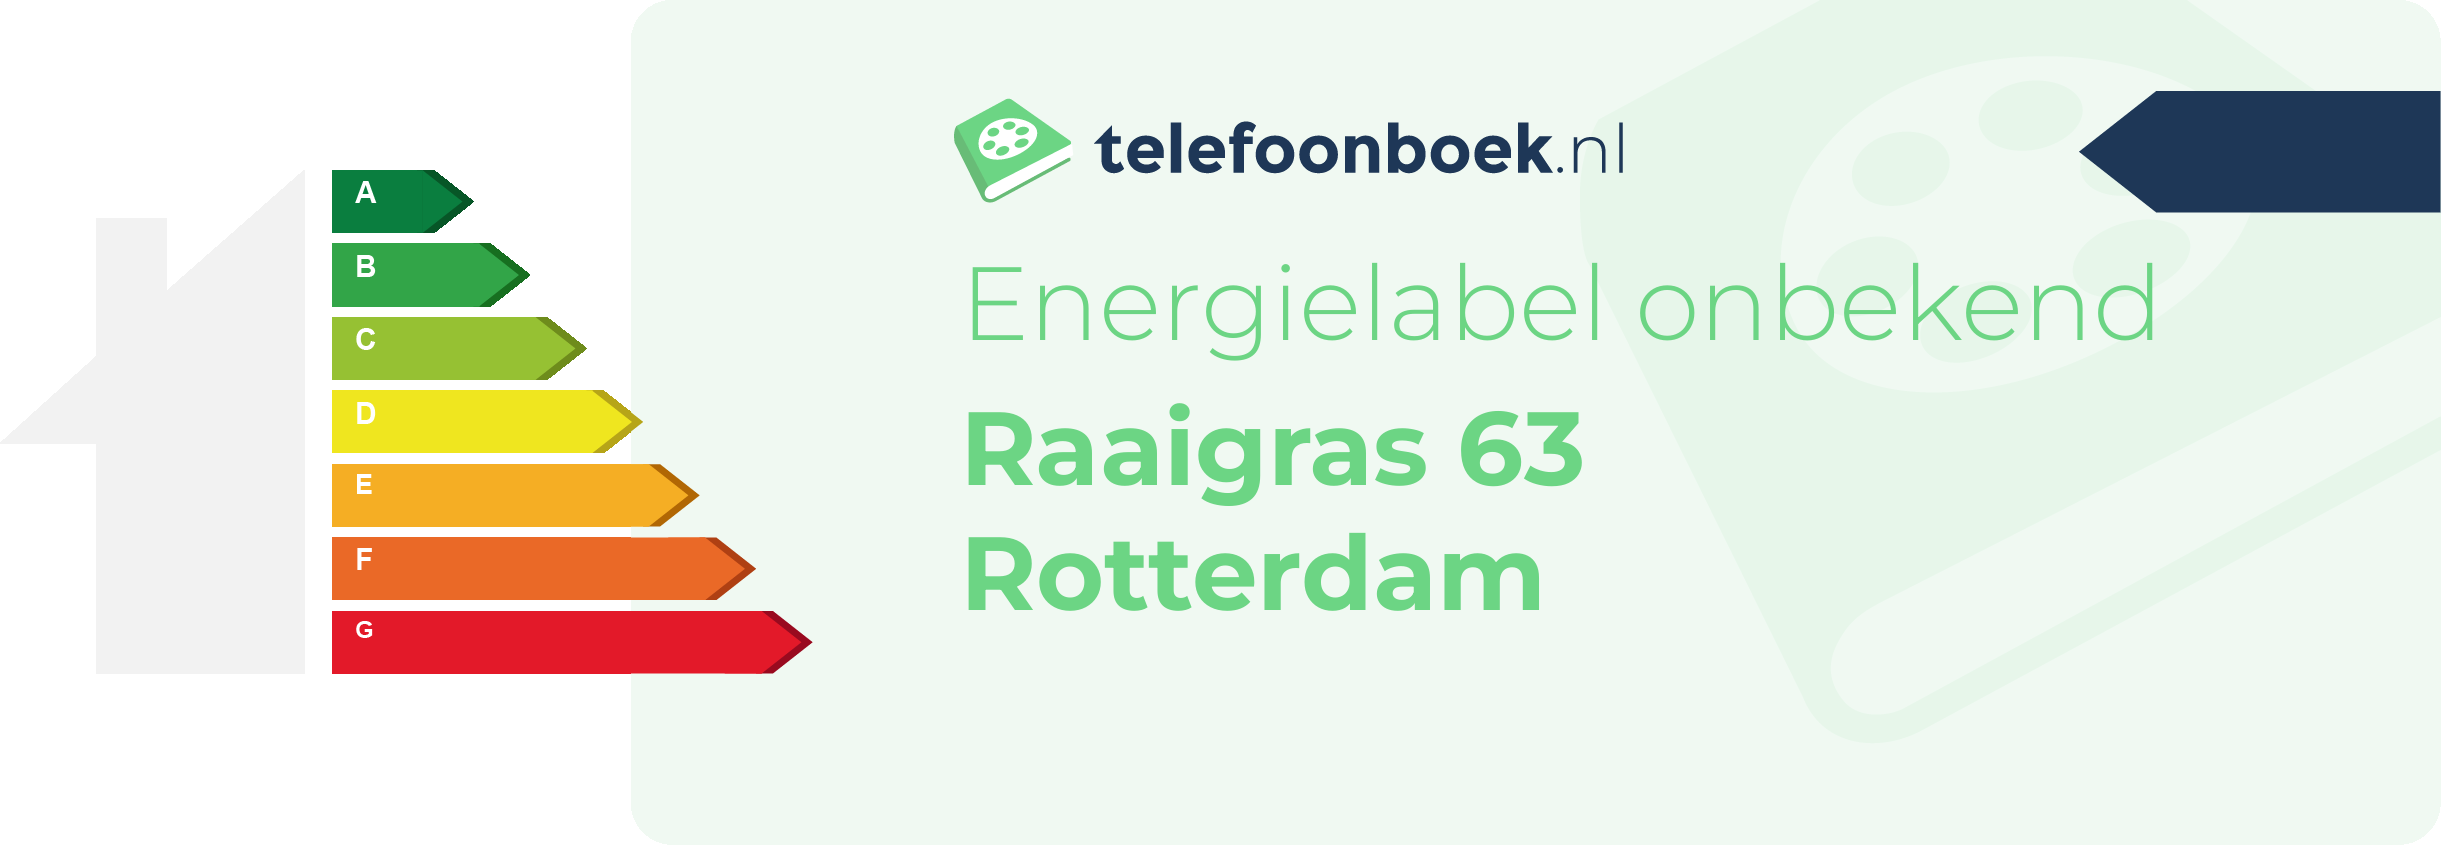 Energielabel Raaigras 63 Rotterdam